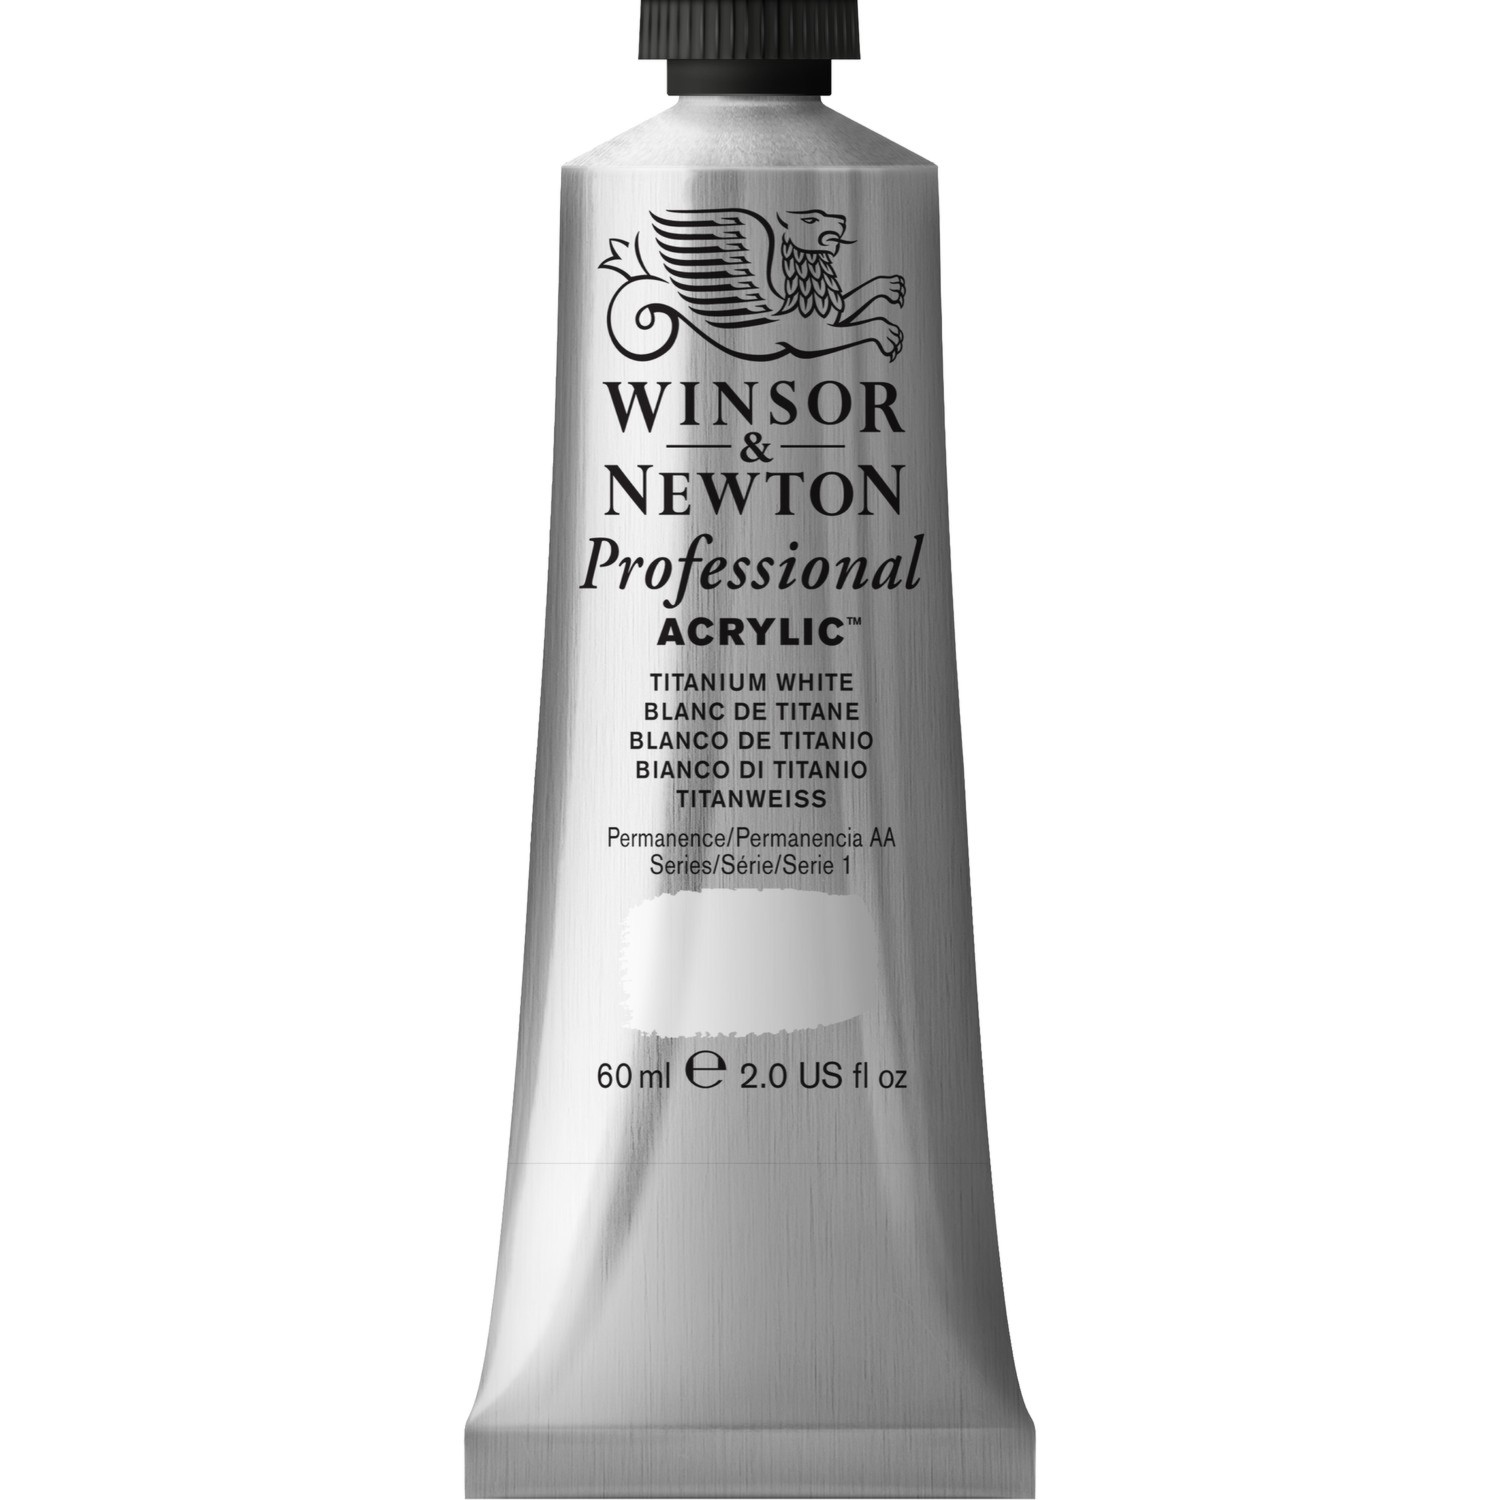 Winsor and Newton 60ml Professional Acrylic Paint - Titanium White Image 1